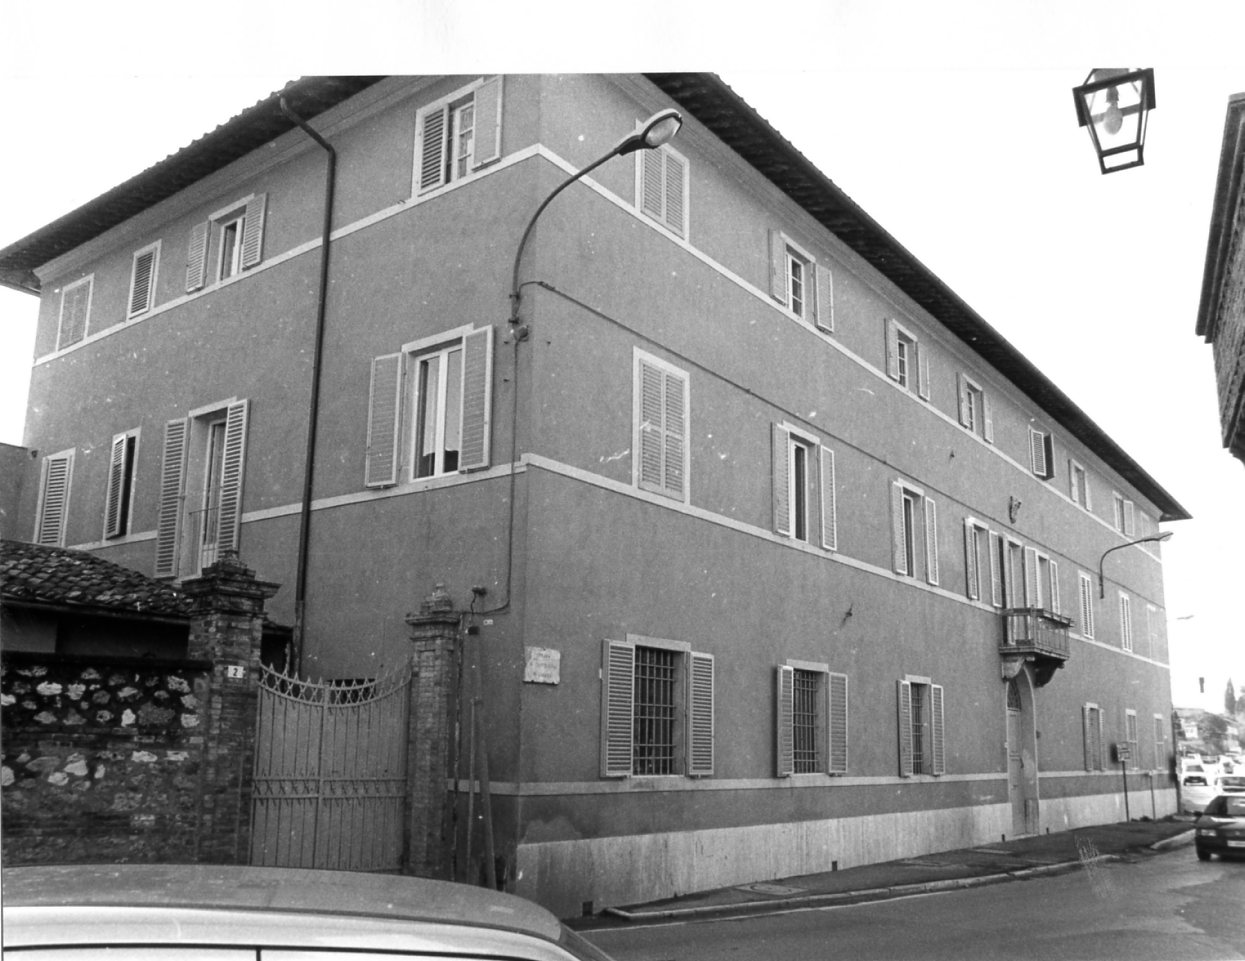 VILLA TOLOMEI poi SARACINI (villa, signorile) - Siena (SI)  (XVI)